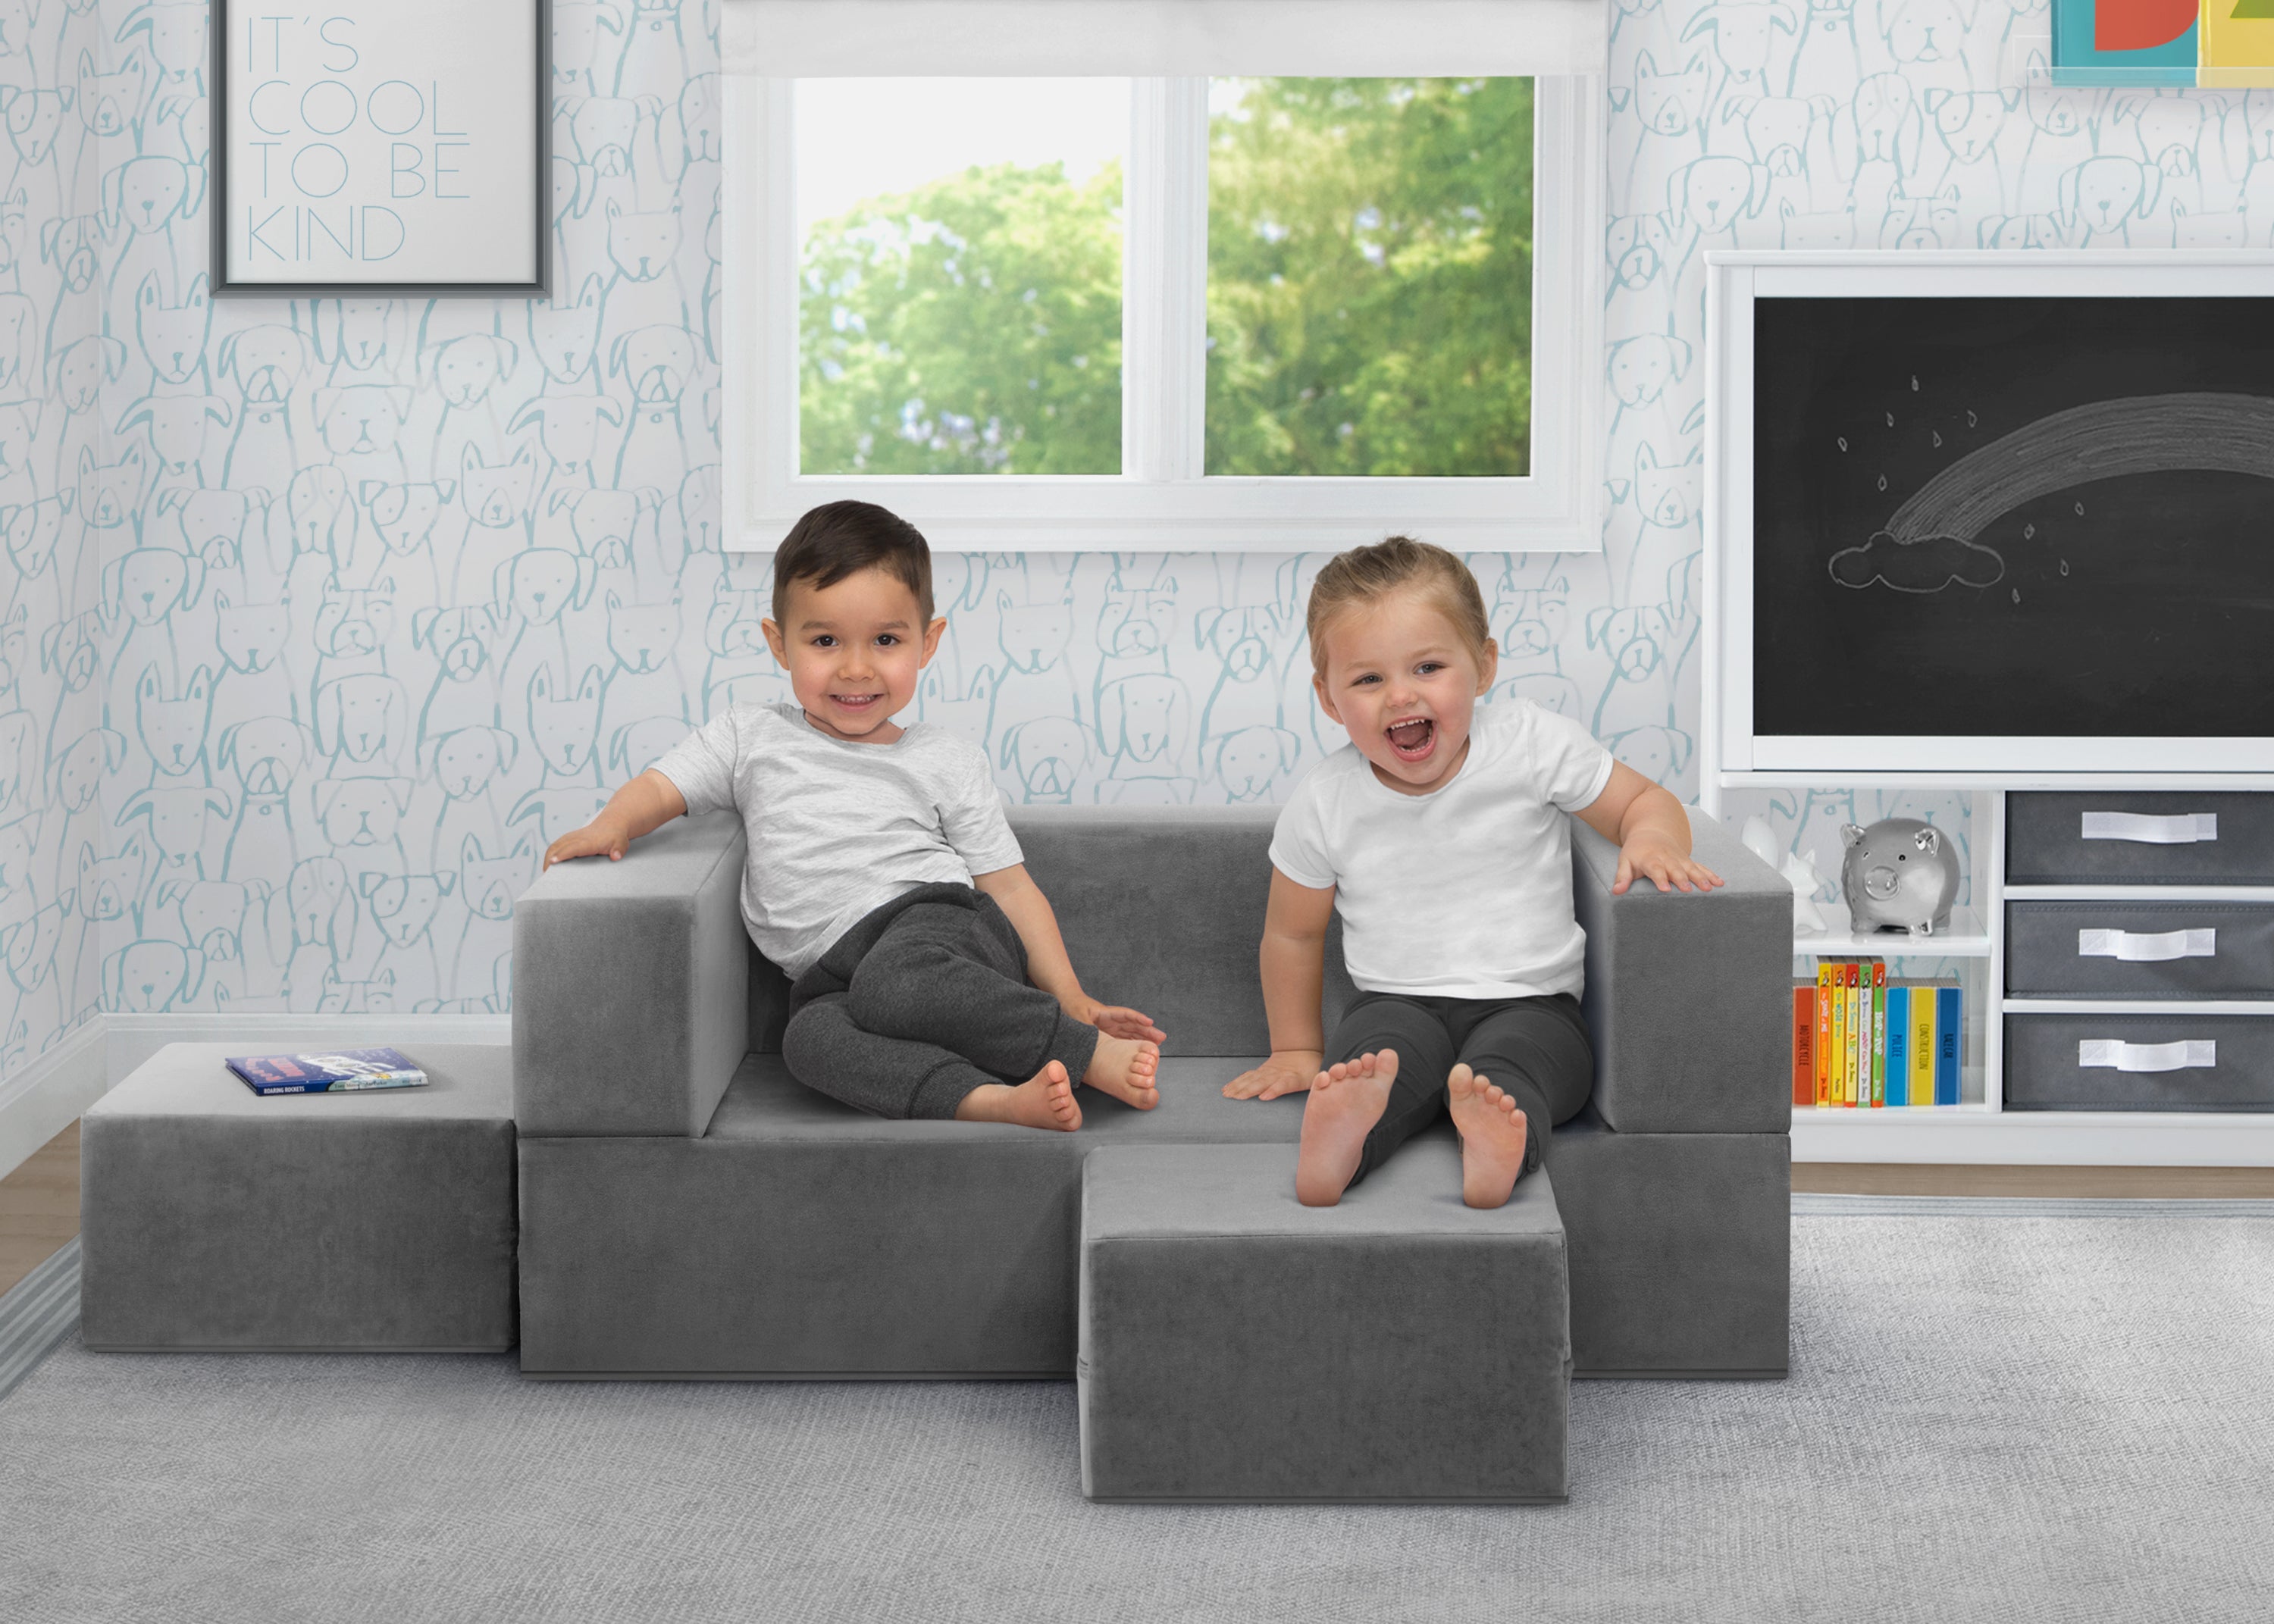 Serta Perfect Sleeper Convertible Sofa and Play Set – Modular Foam